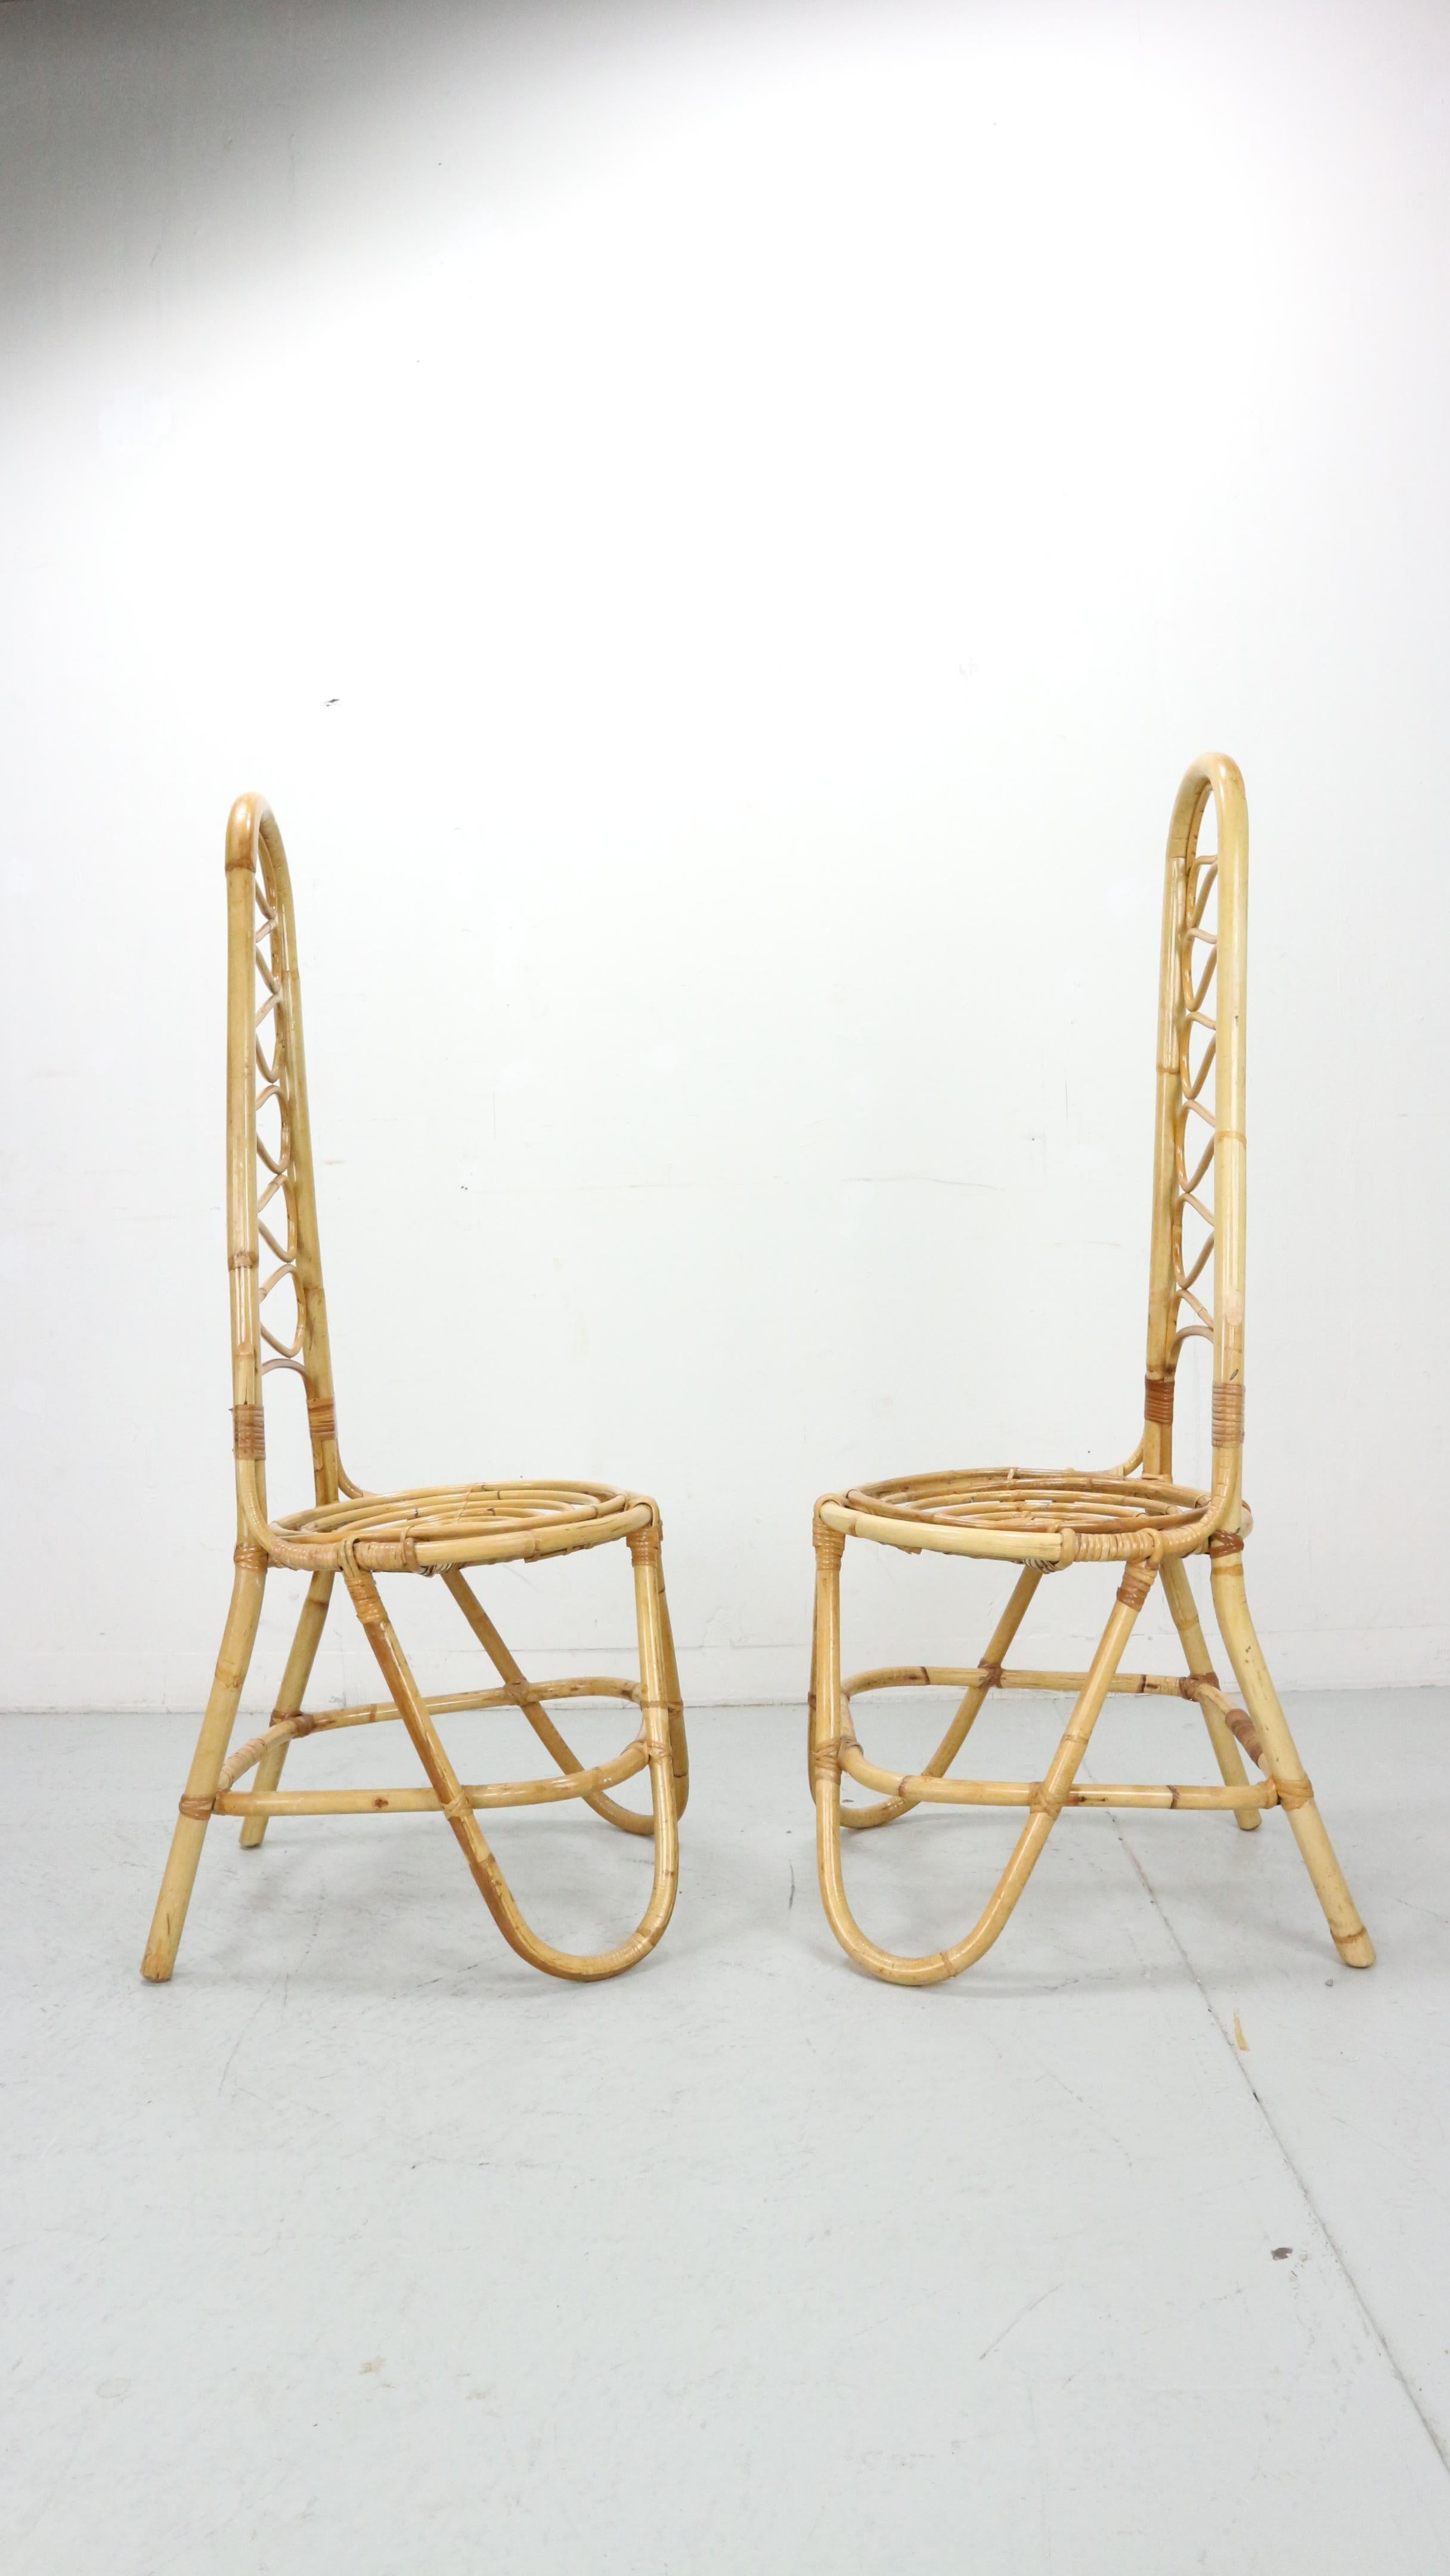 20th Century Bamboo Chairs by Dirk Van Sliedrecht for Rohe Noordwolde, 1960 For Sale